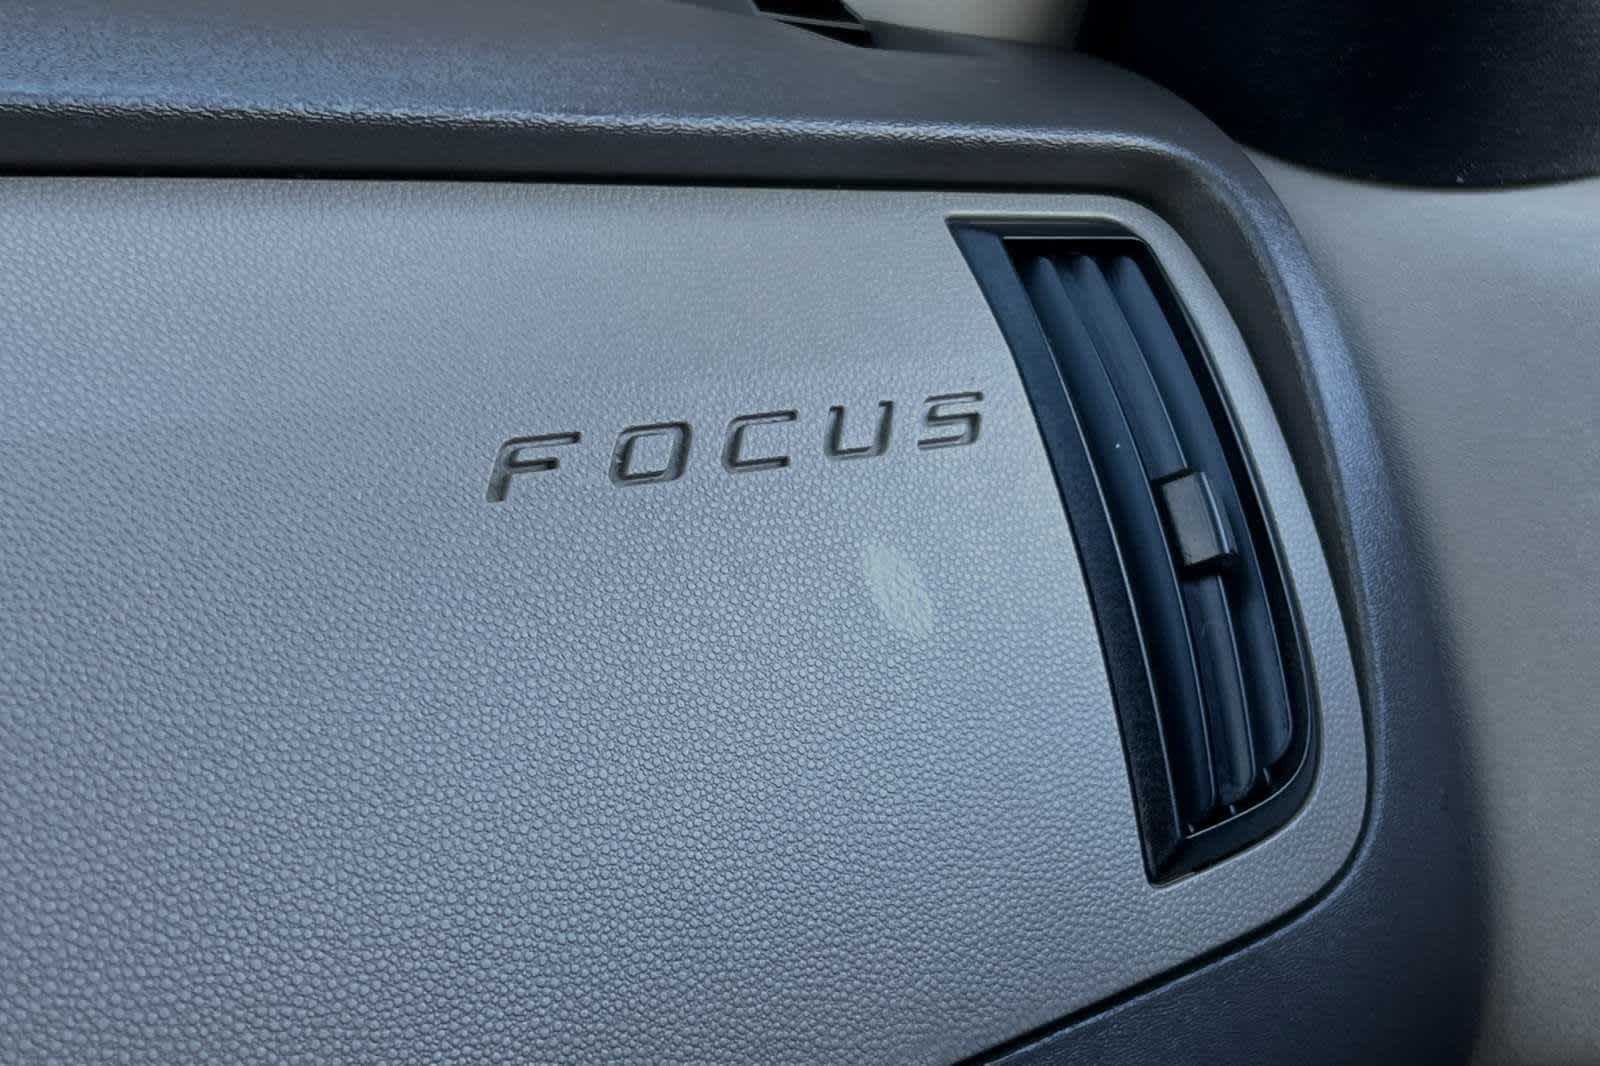 2010 Ford Focus SE 14